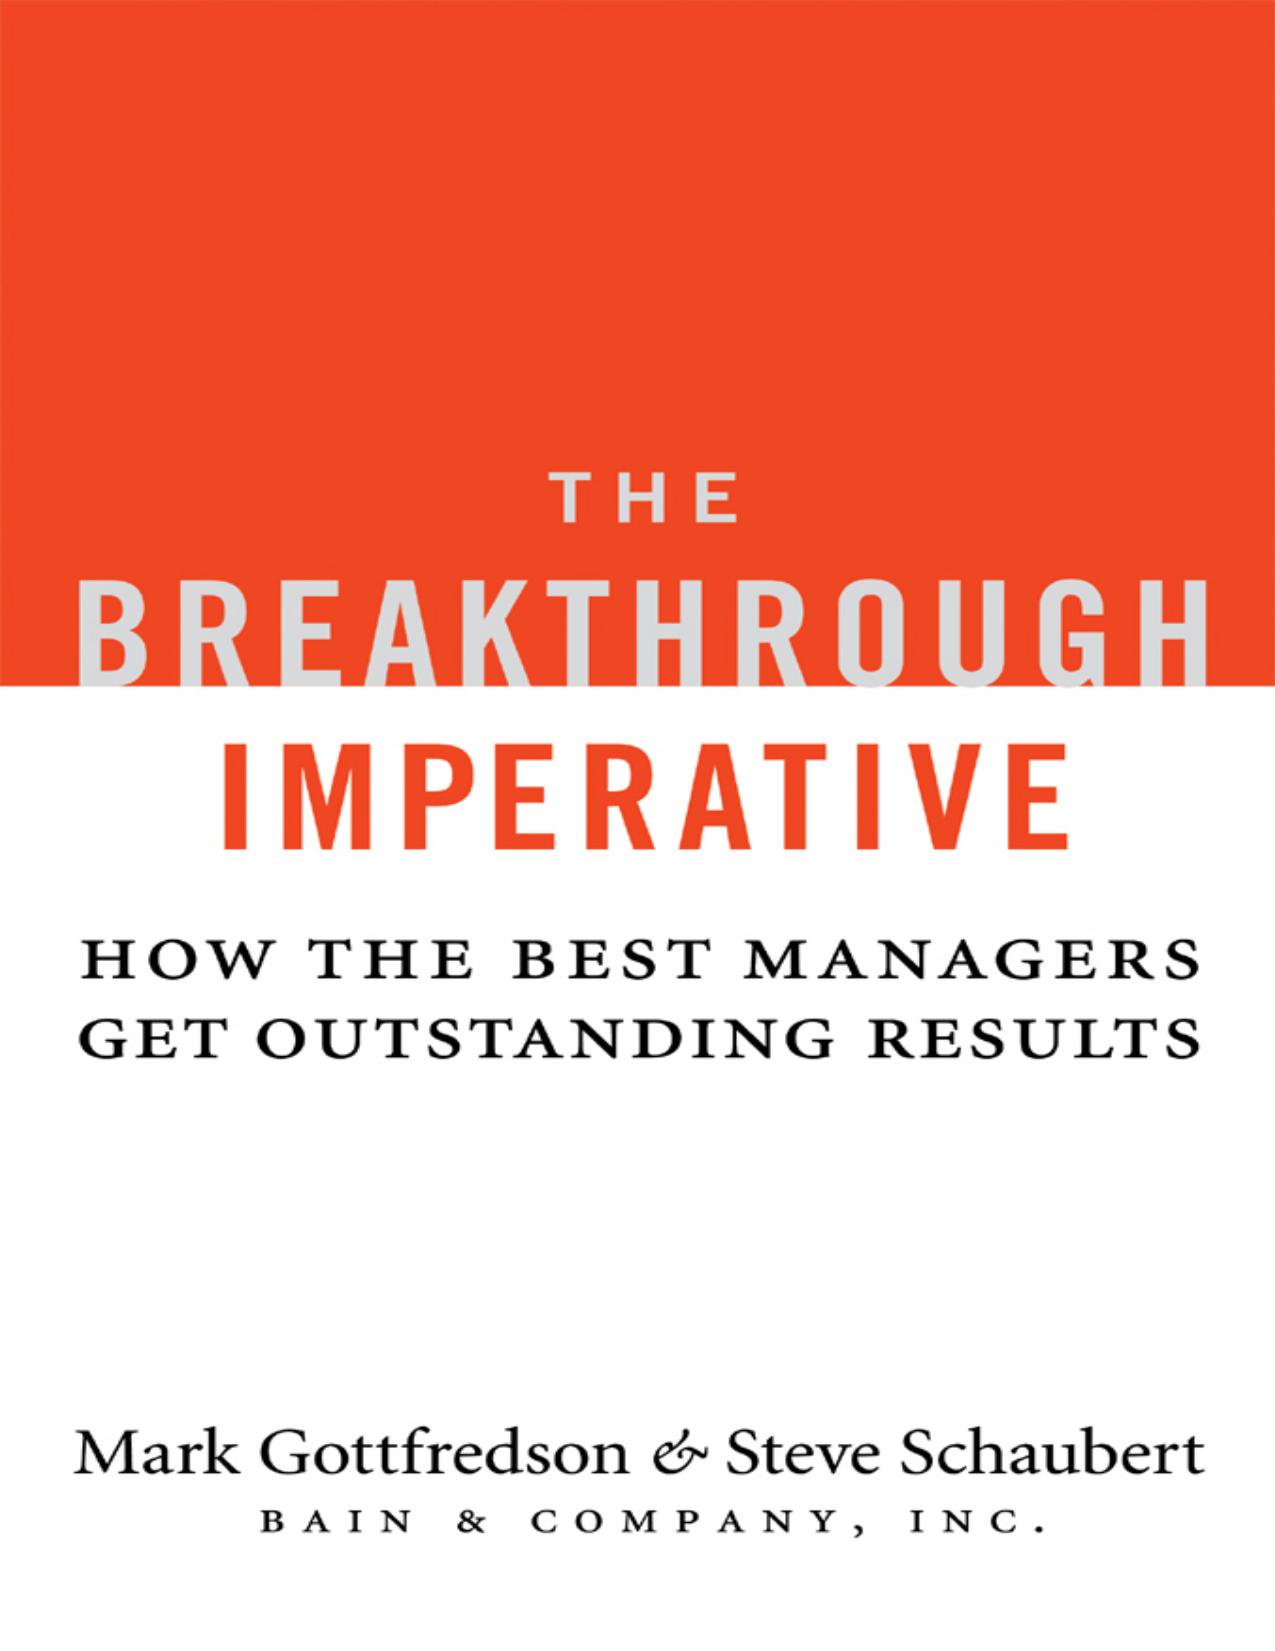 The Breakthrough Imperative by Mark Gottfredson